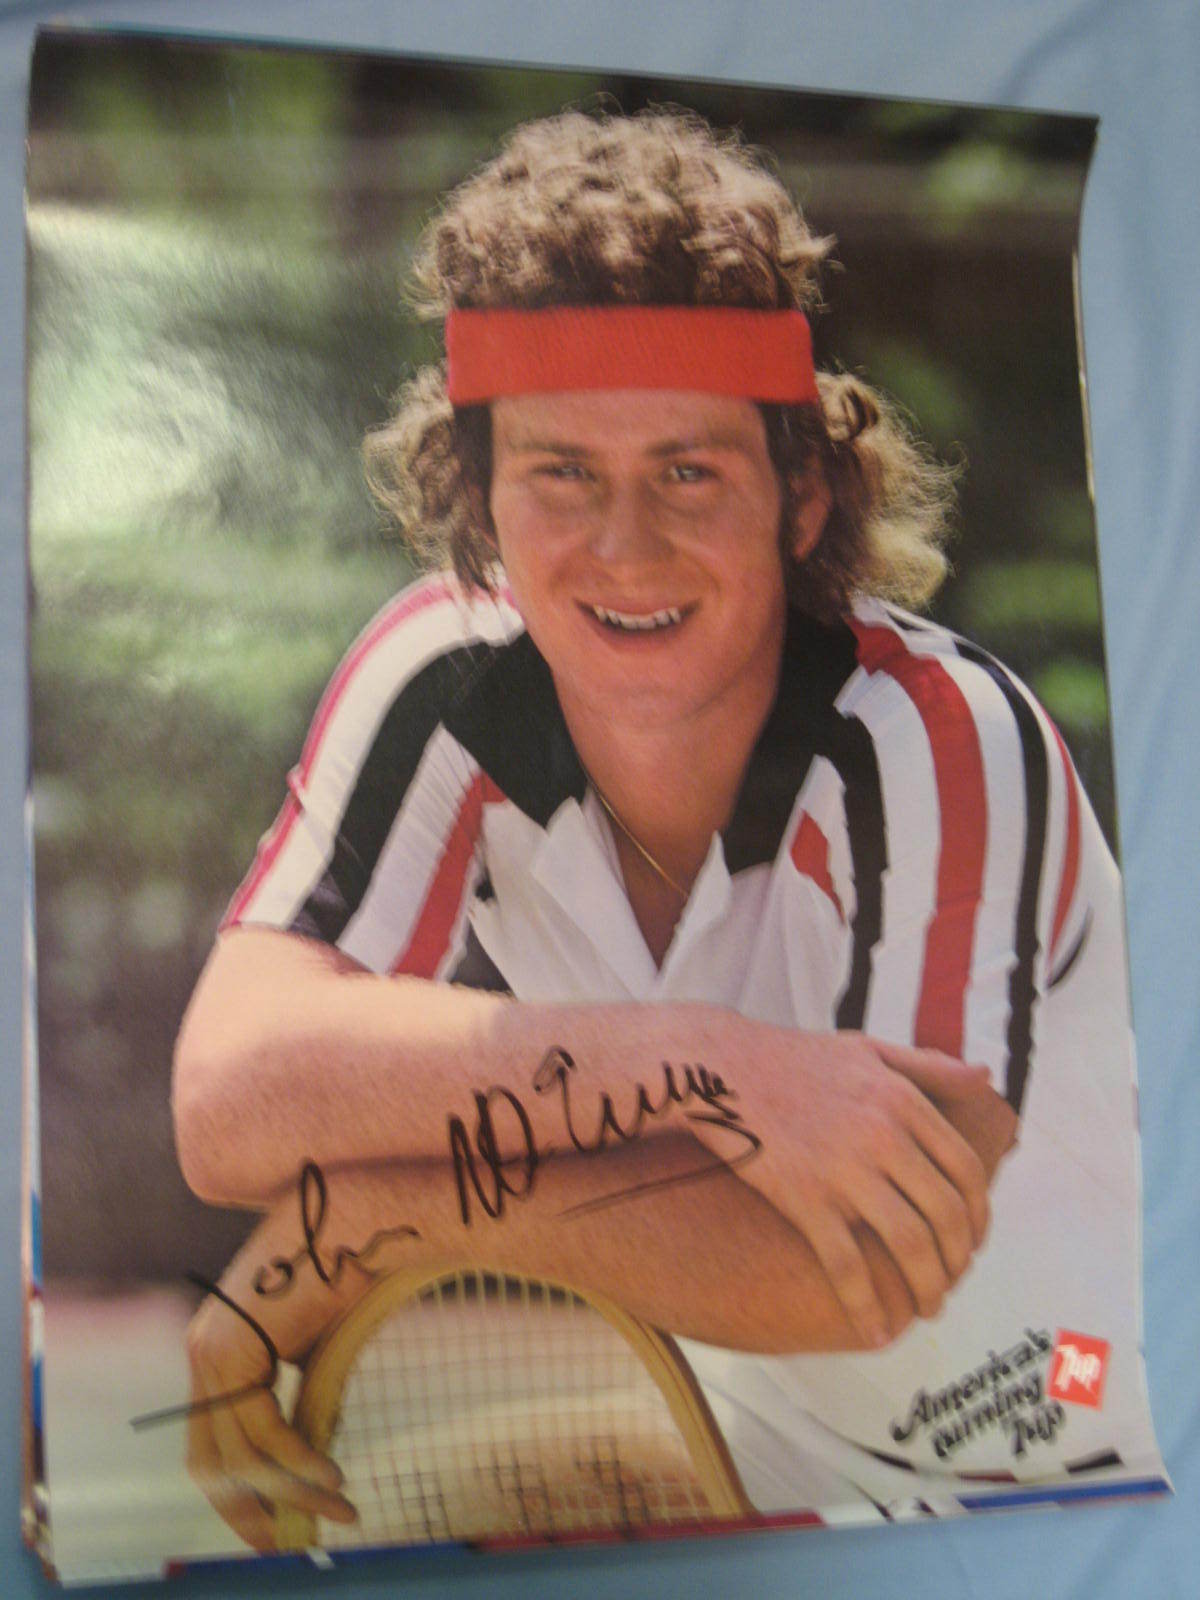 Original 1979 Pro Tennis Player John McEnroe Full-Size 19x25in. 7Up Poster MINT